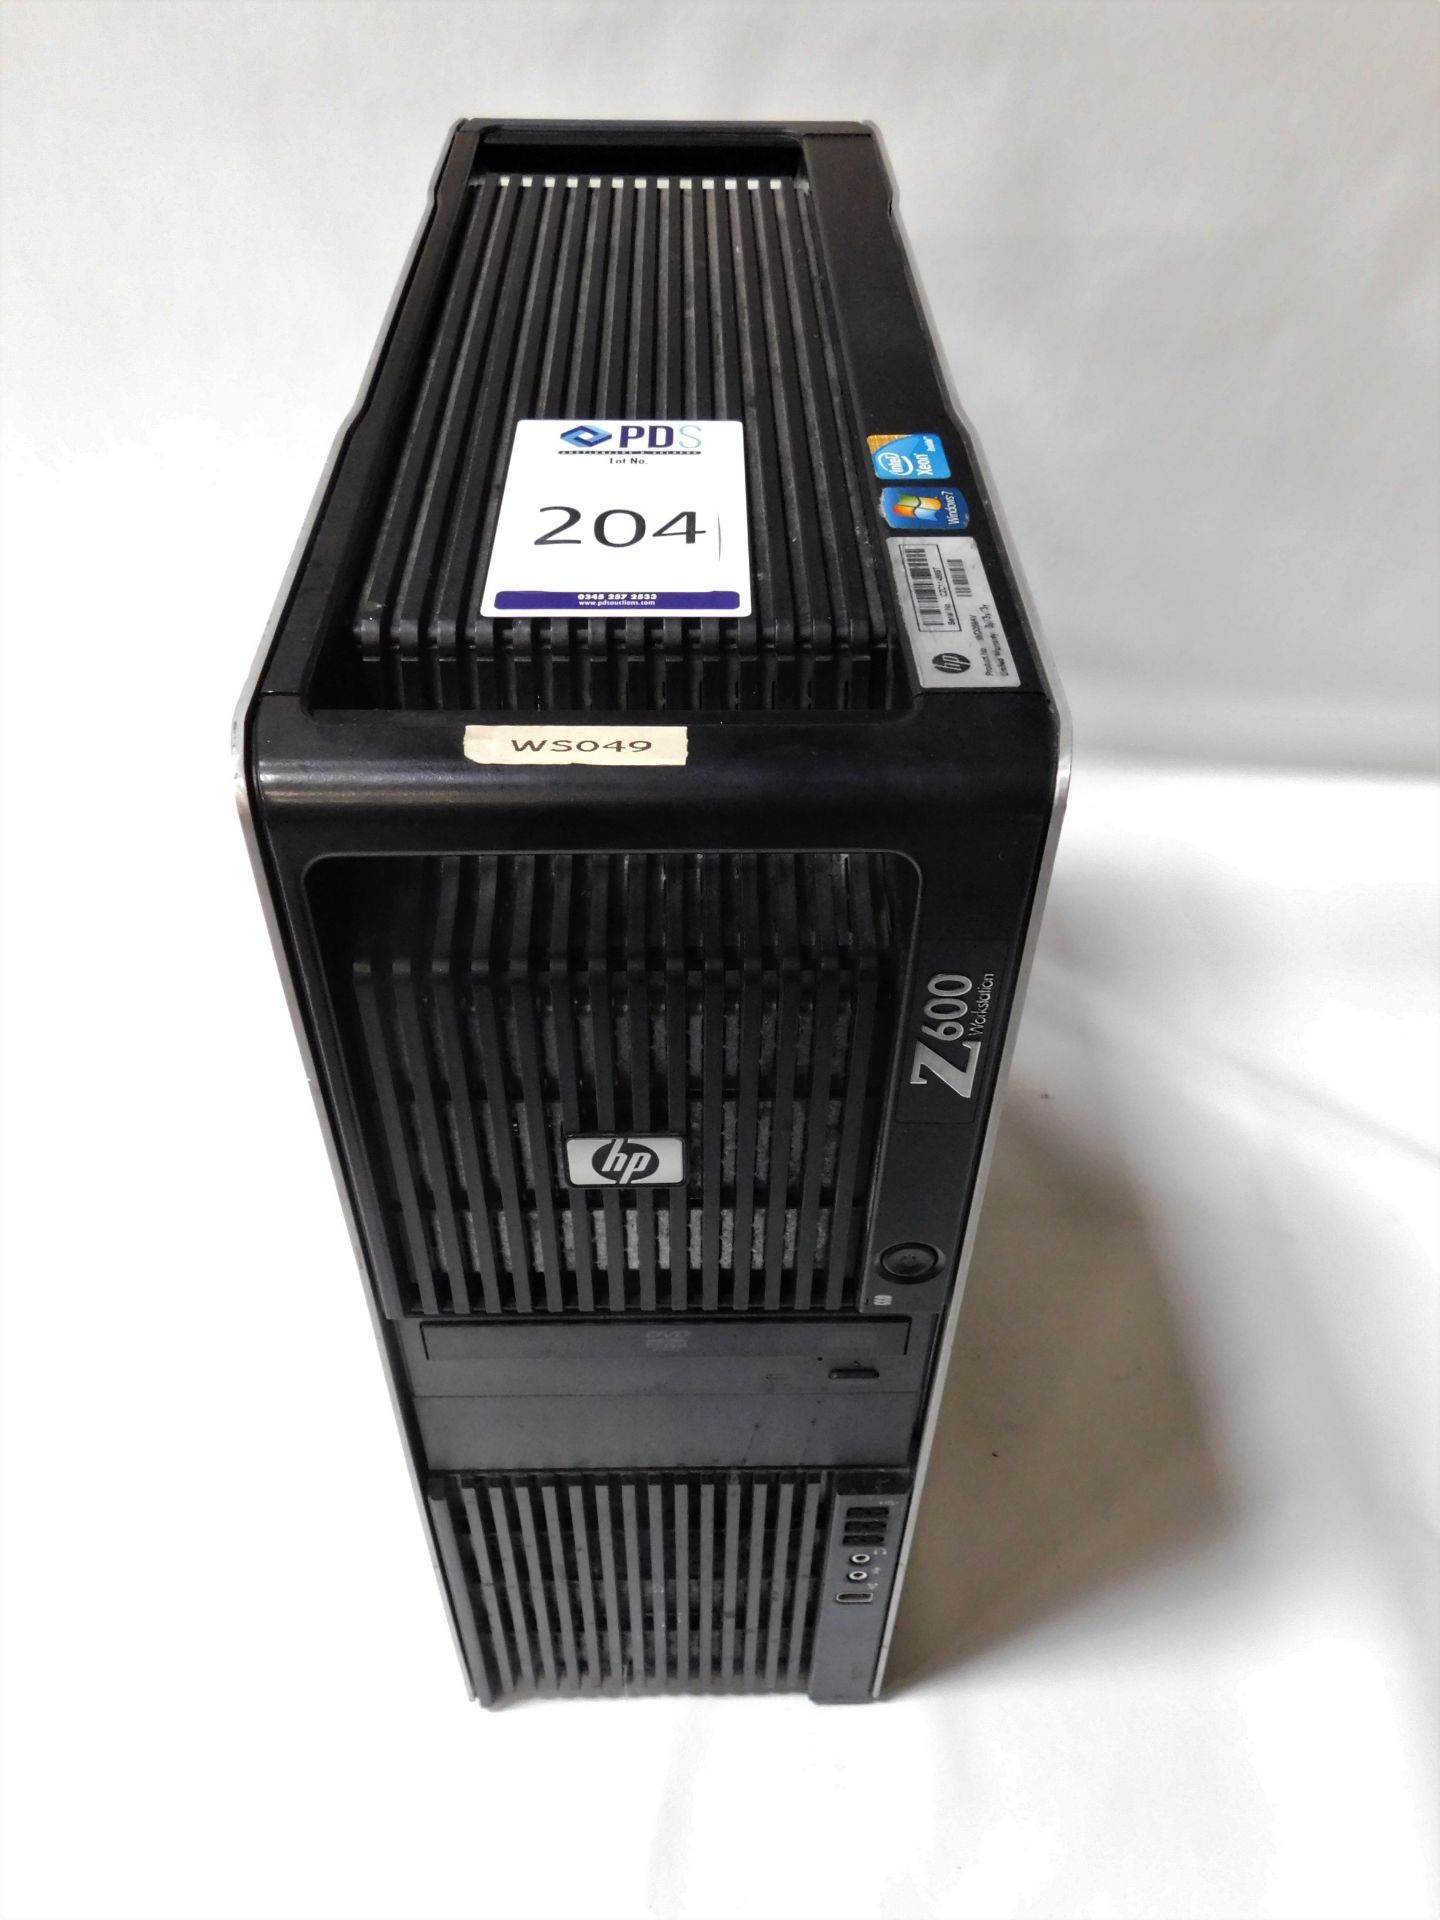 HP Z600 Xeon CPU X5650 Workstation, 2.67 GHz with 32 GB RAM & Quadro 4000 Video Card (Location